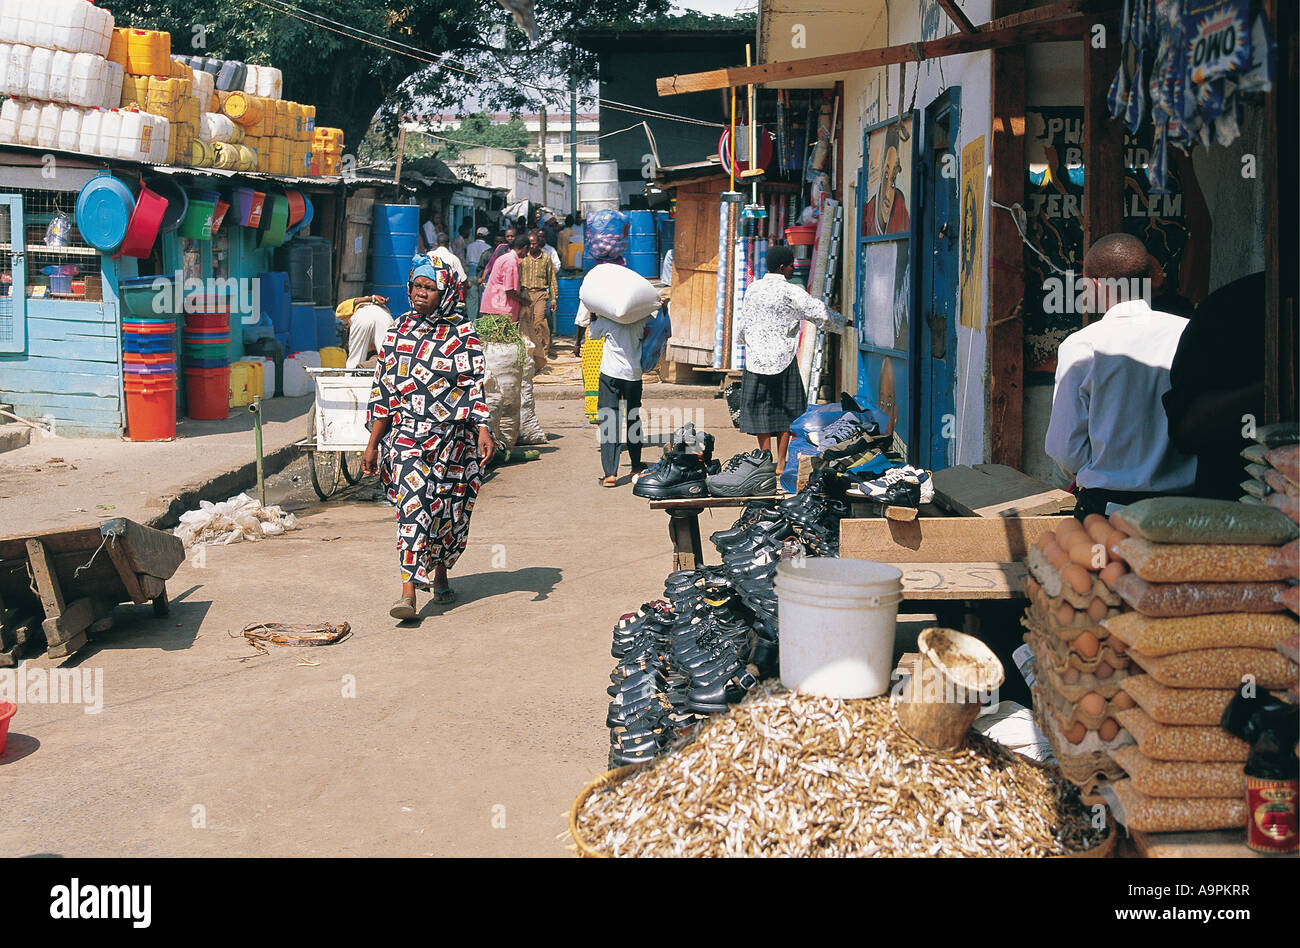 Market scene Arusha Tanzania East Africa Stock Photo